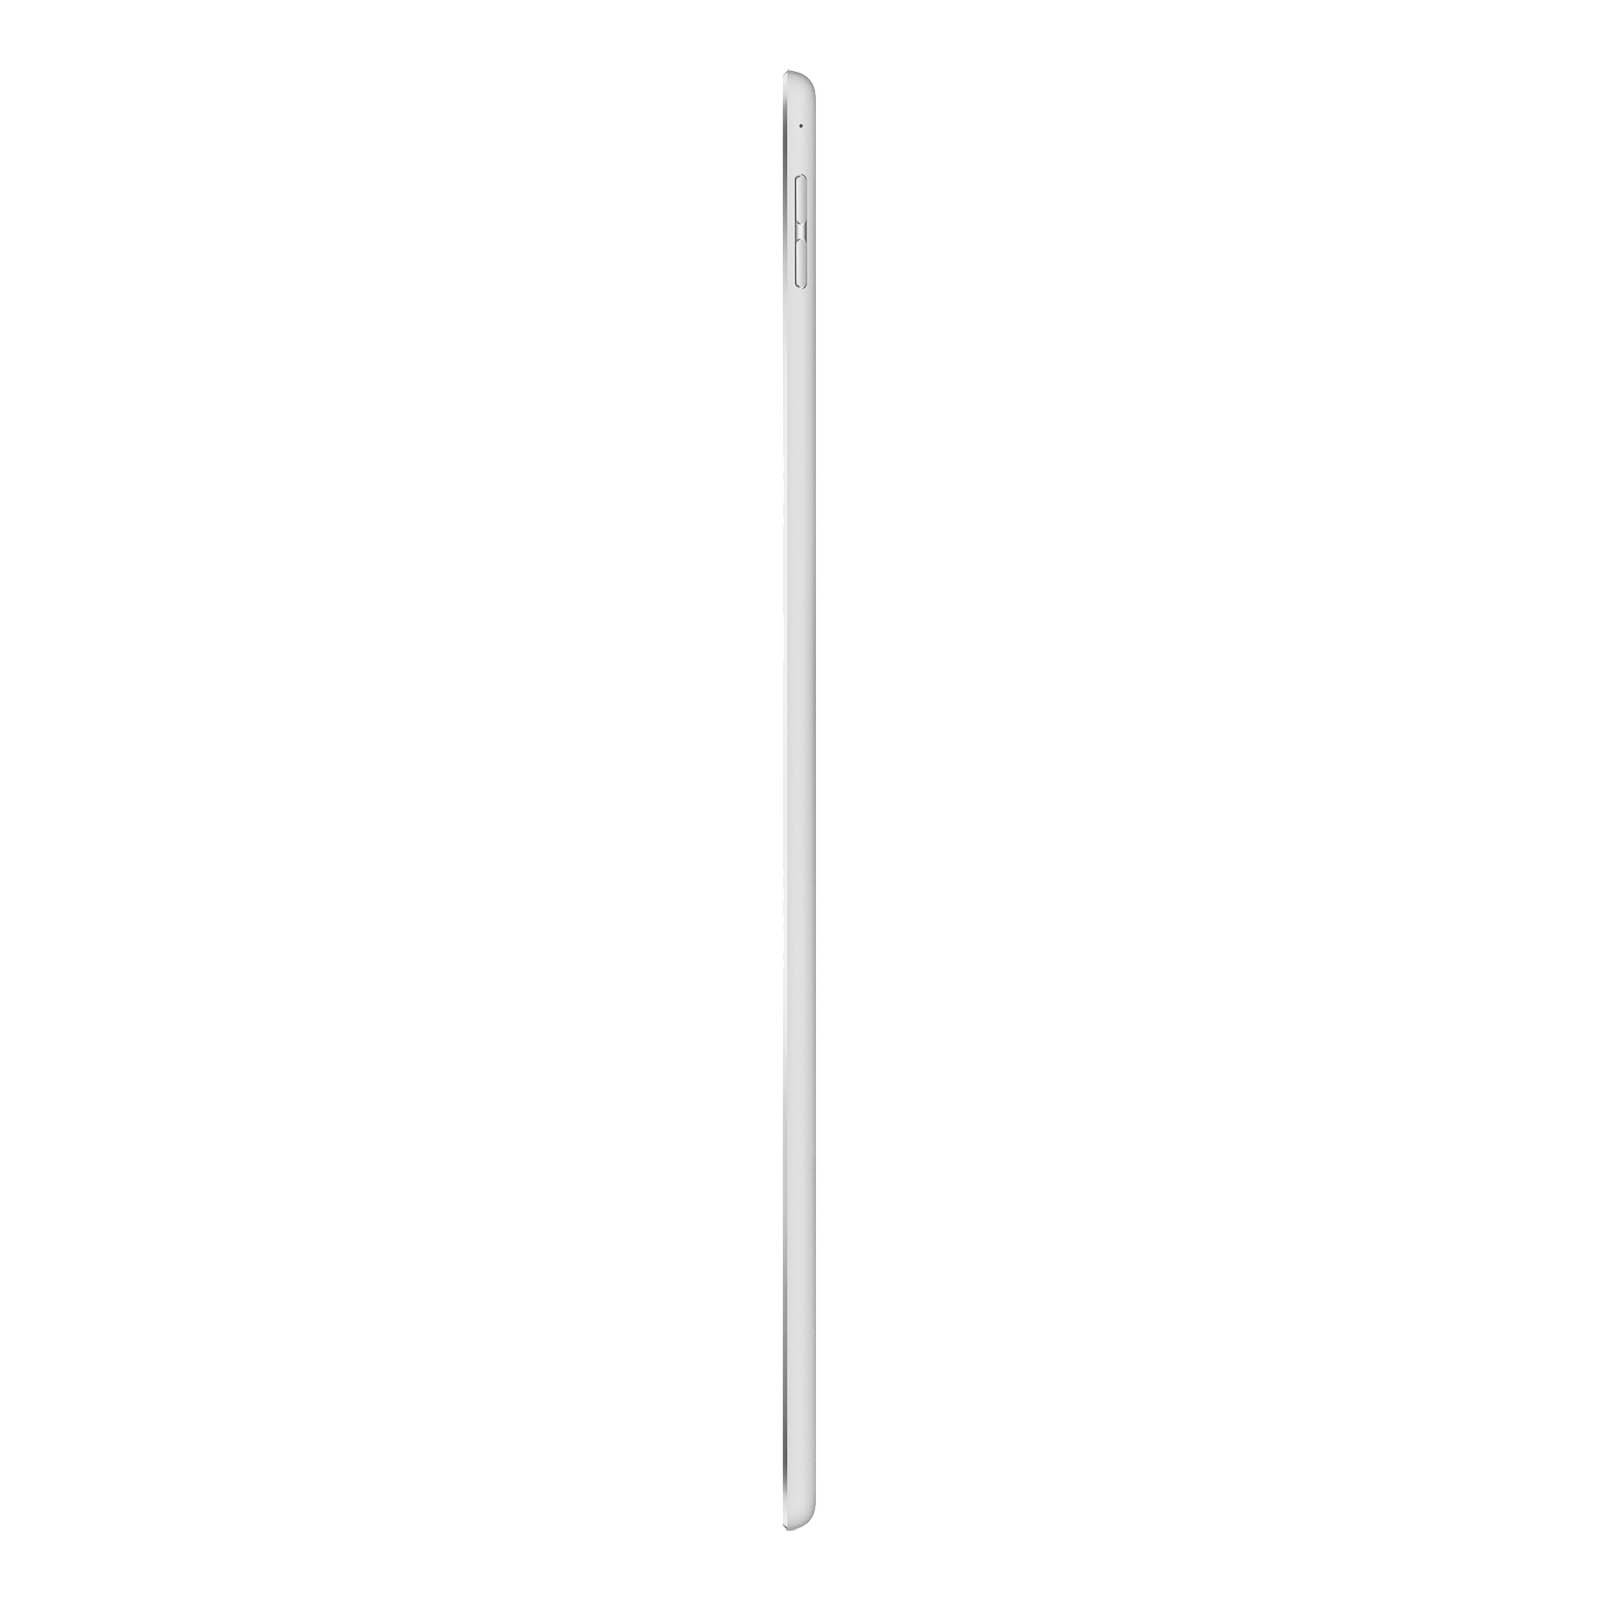 iPad Pro 12.9 Inch 3rd Gen 64GB Silver Very Good - WiFi